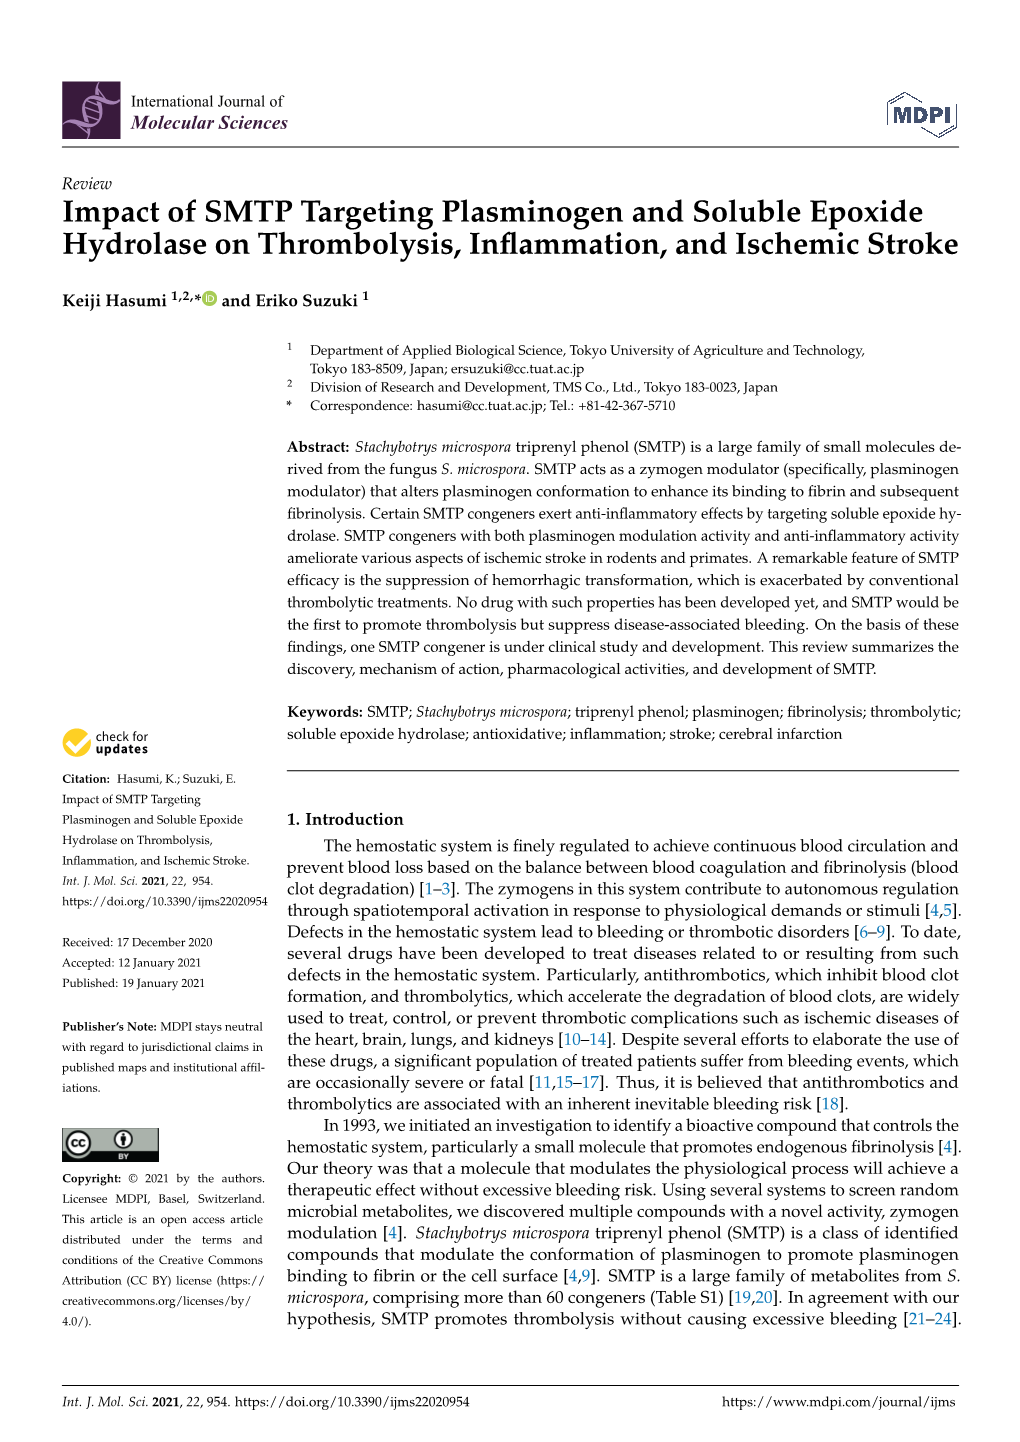 Impact of SMTP Targeting Plasminogen and Soluble Epoxide Hydrolase on Thrombolysis, Inﬂammation, and Ischemic Stroke